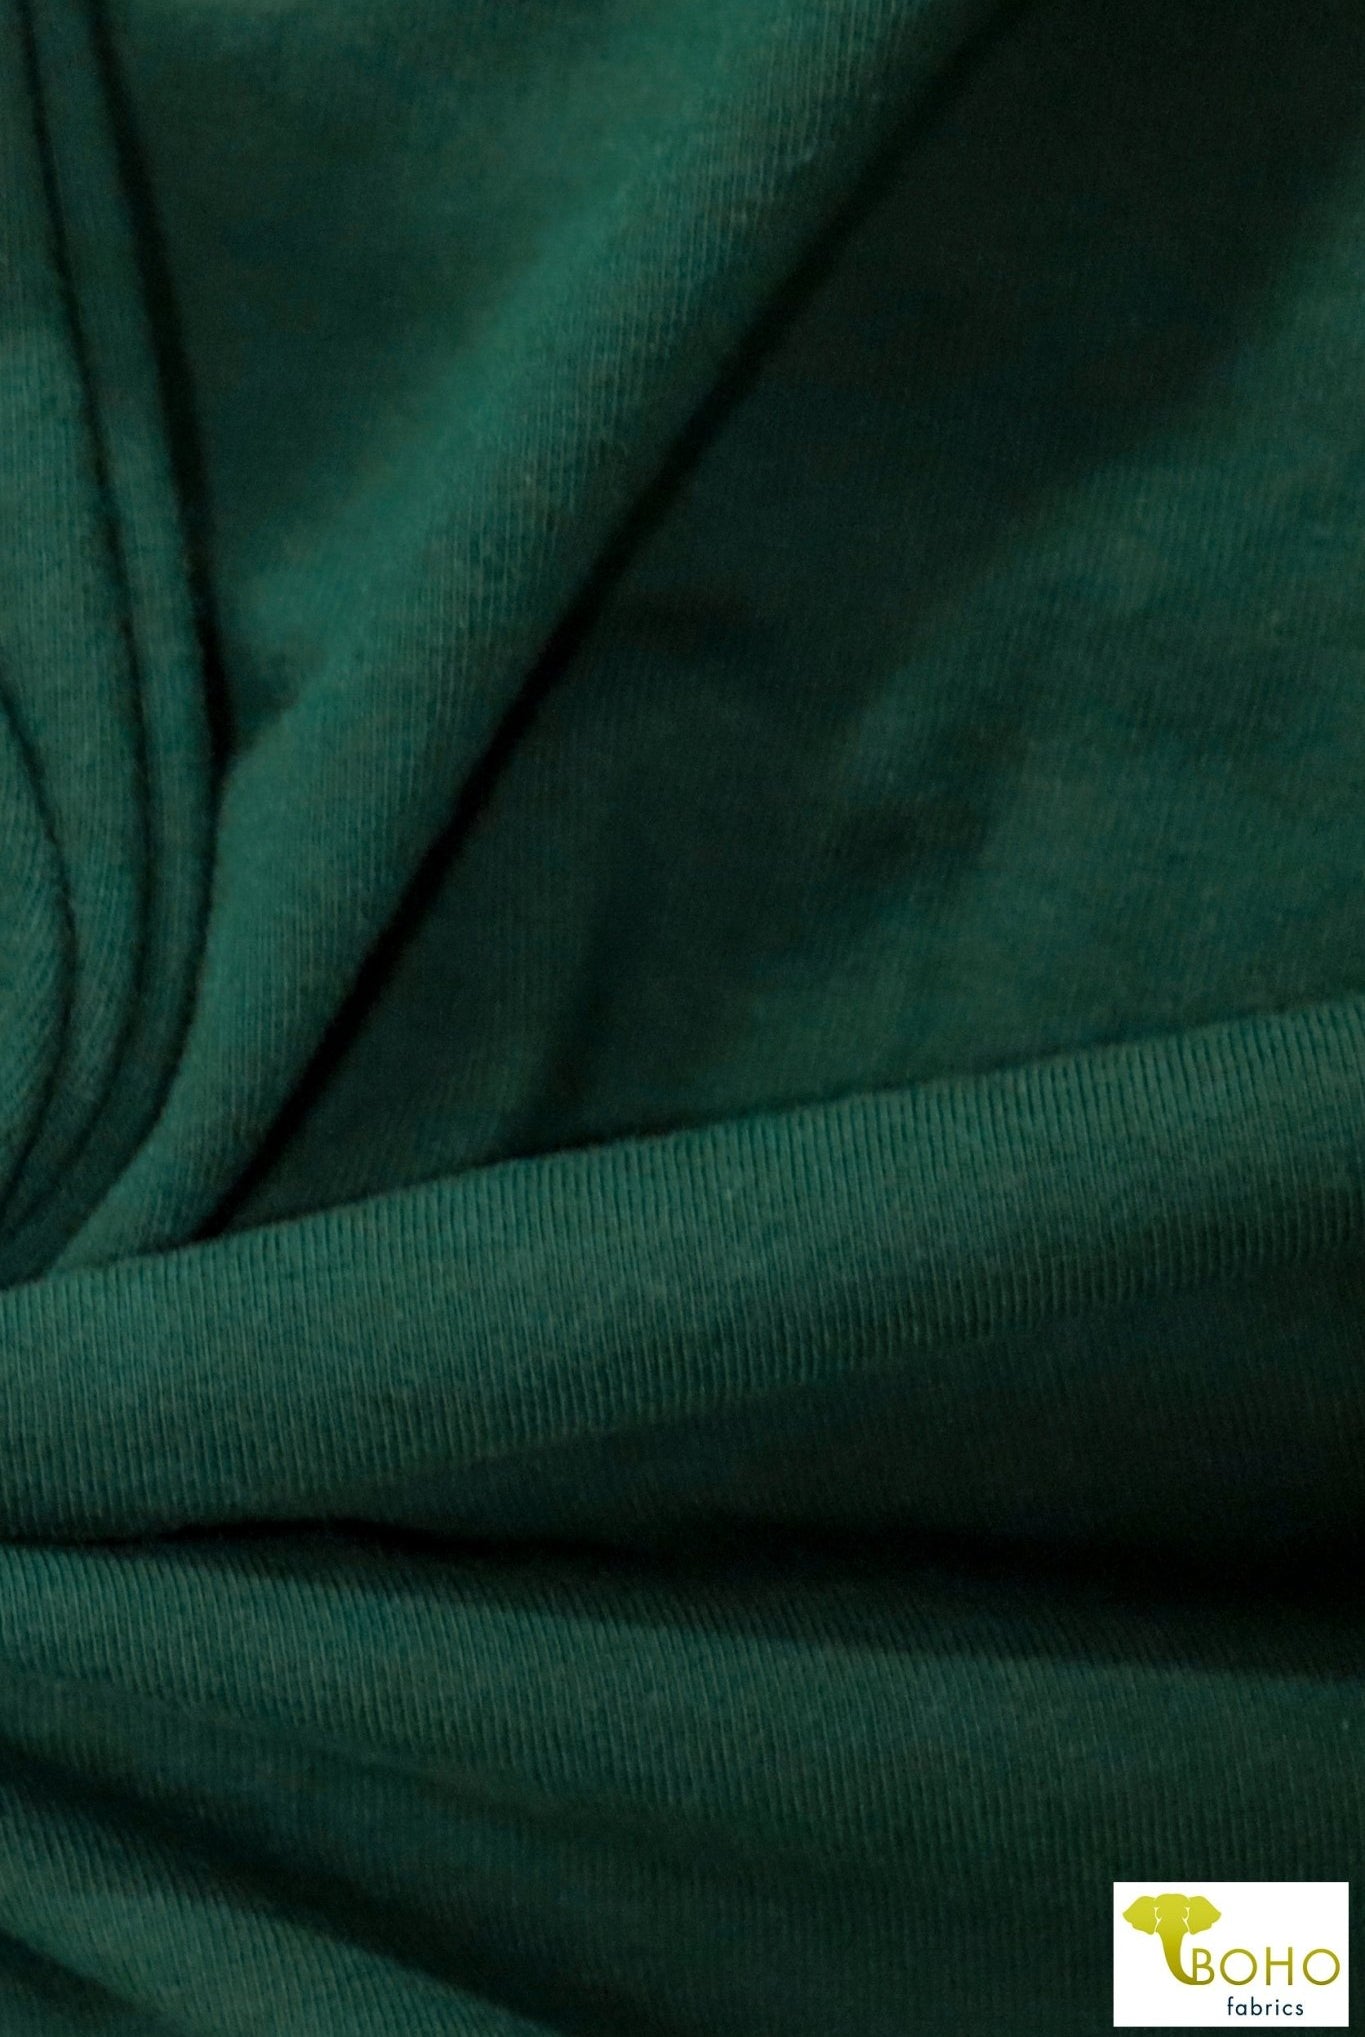 Hunter Green, Solid Cotton Spandex Knit Fabric, 10 oz. - Boho Fabrics